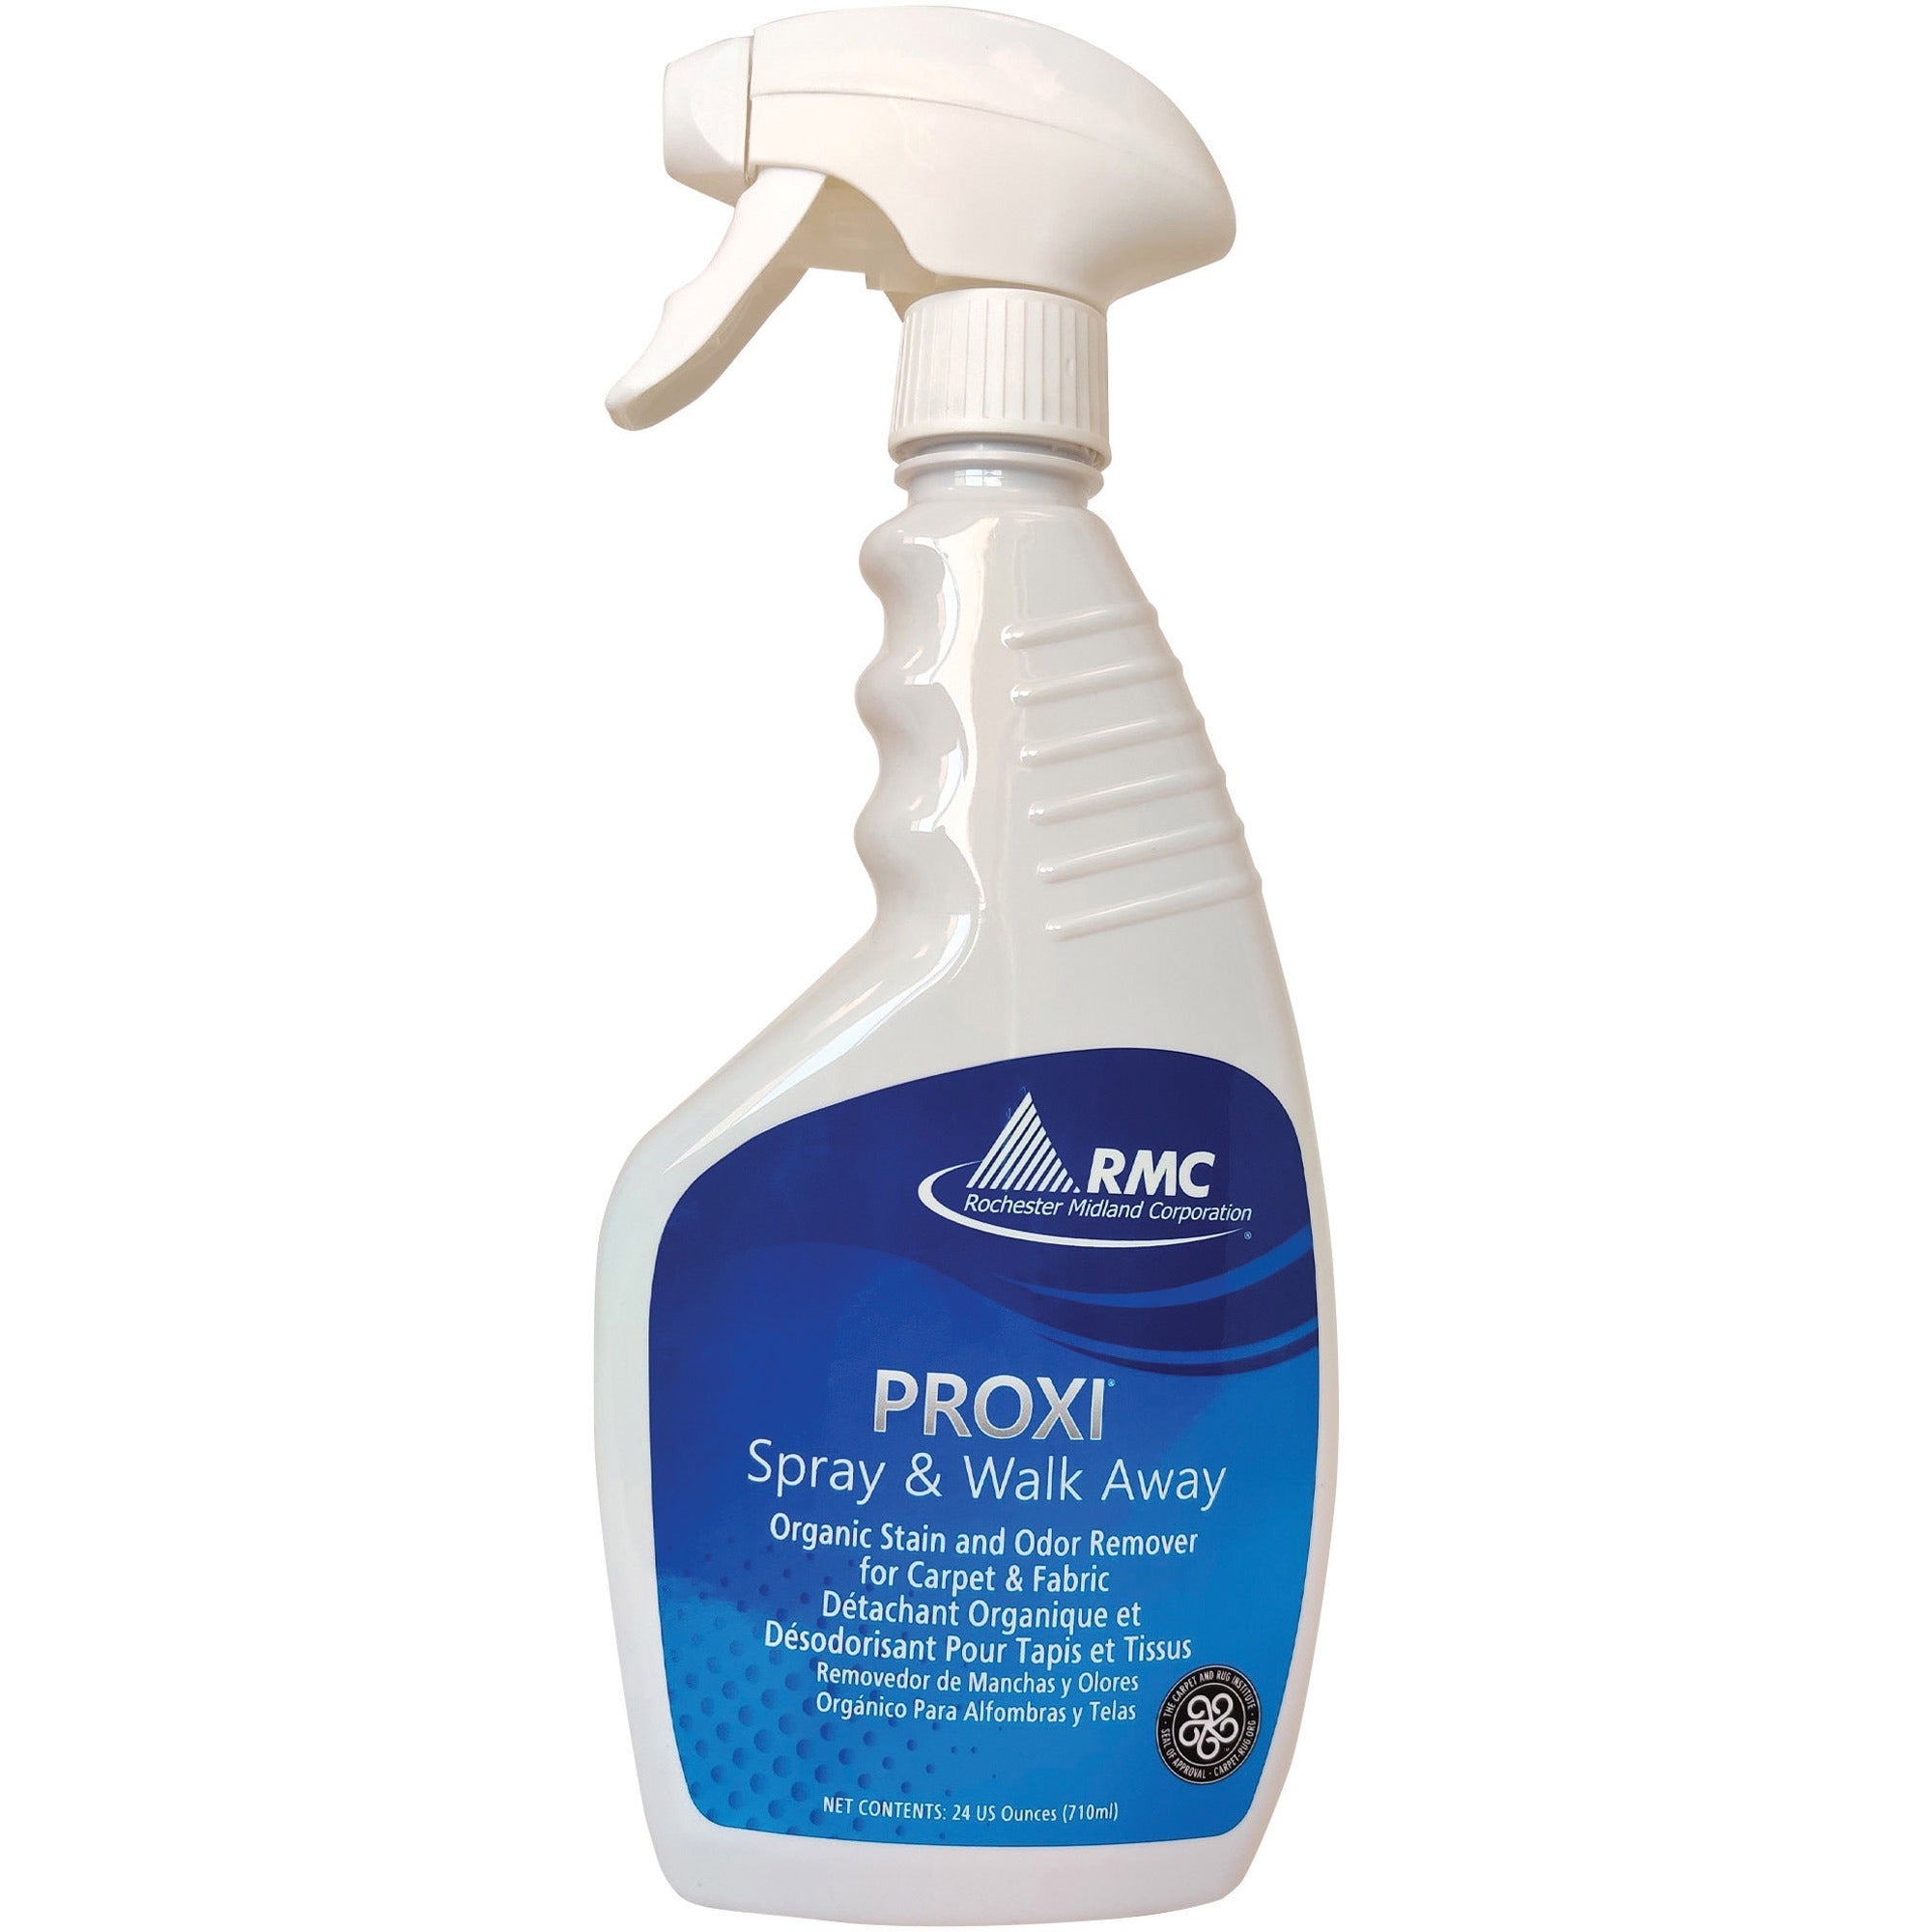 rmc-proxi-spray-walk-away-cleaner-ready-to-use-24-fl-oz-08-quart-mild-scent-6-carton-deodorize-quick-drying-phosphate-free-scrub-free-clear_rcm11849314ct - 1